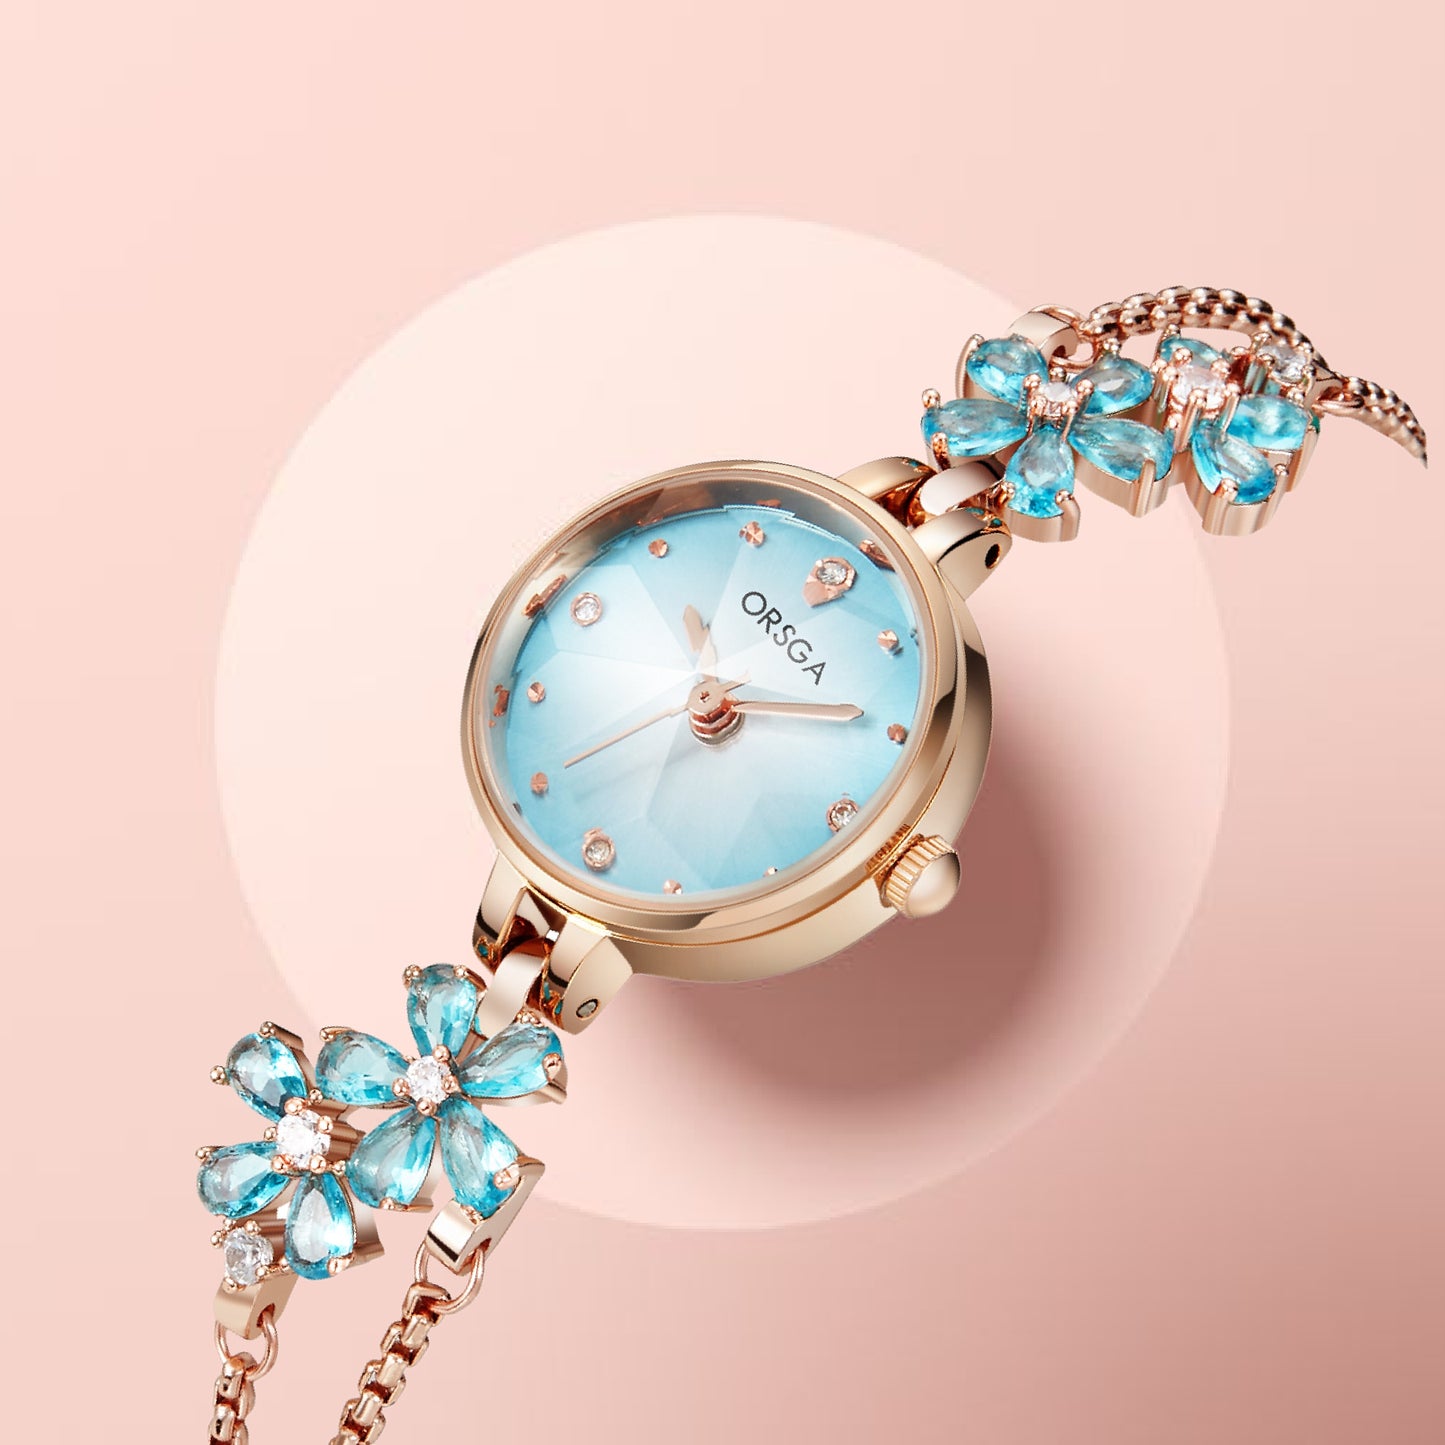 ORSGA FLEUR Blue Dial Flower Chain Bracelet Watch